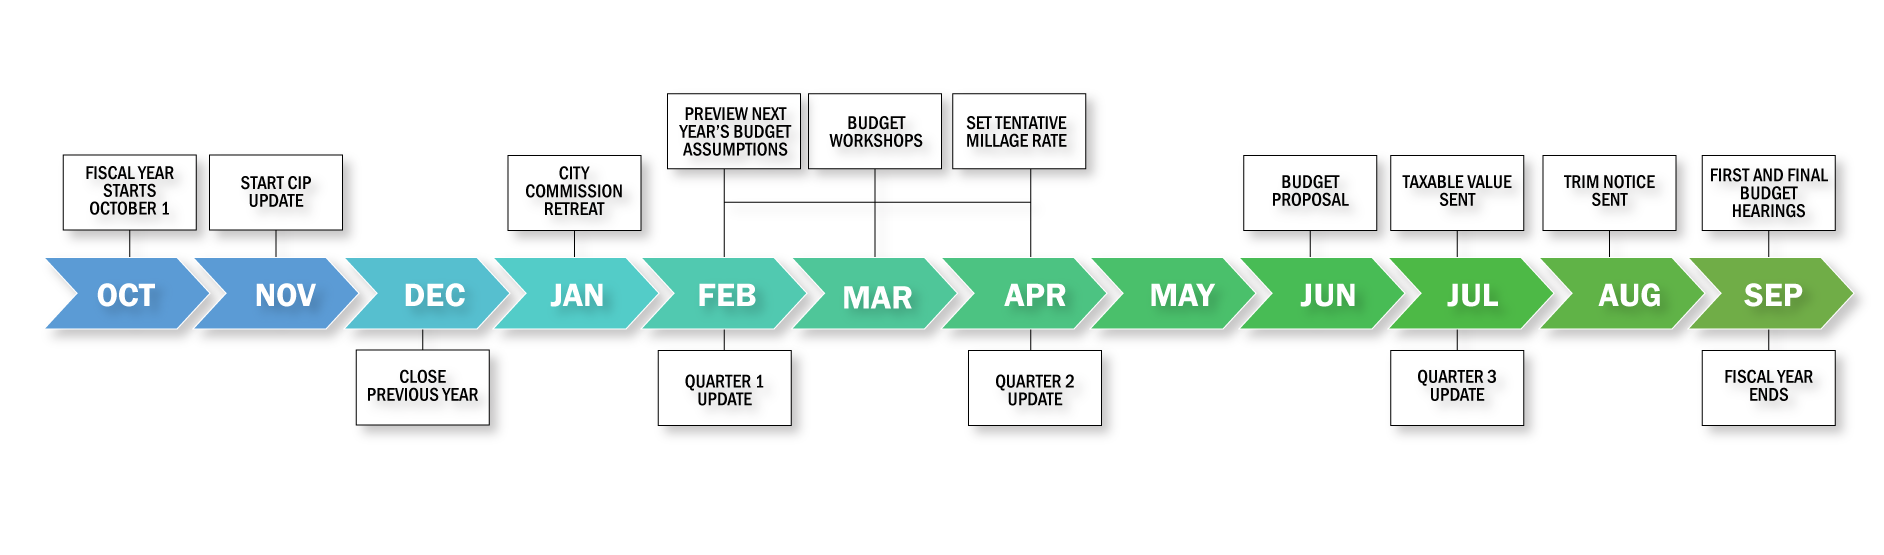 Budget Process timeline